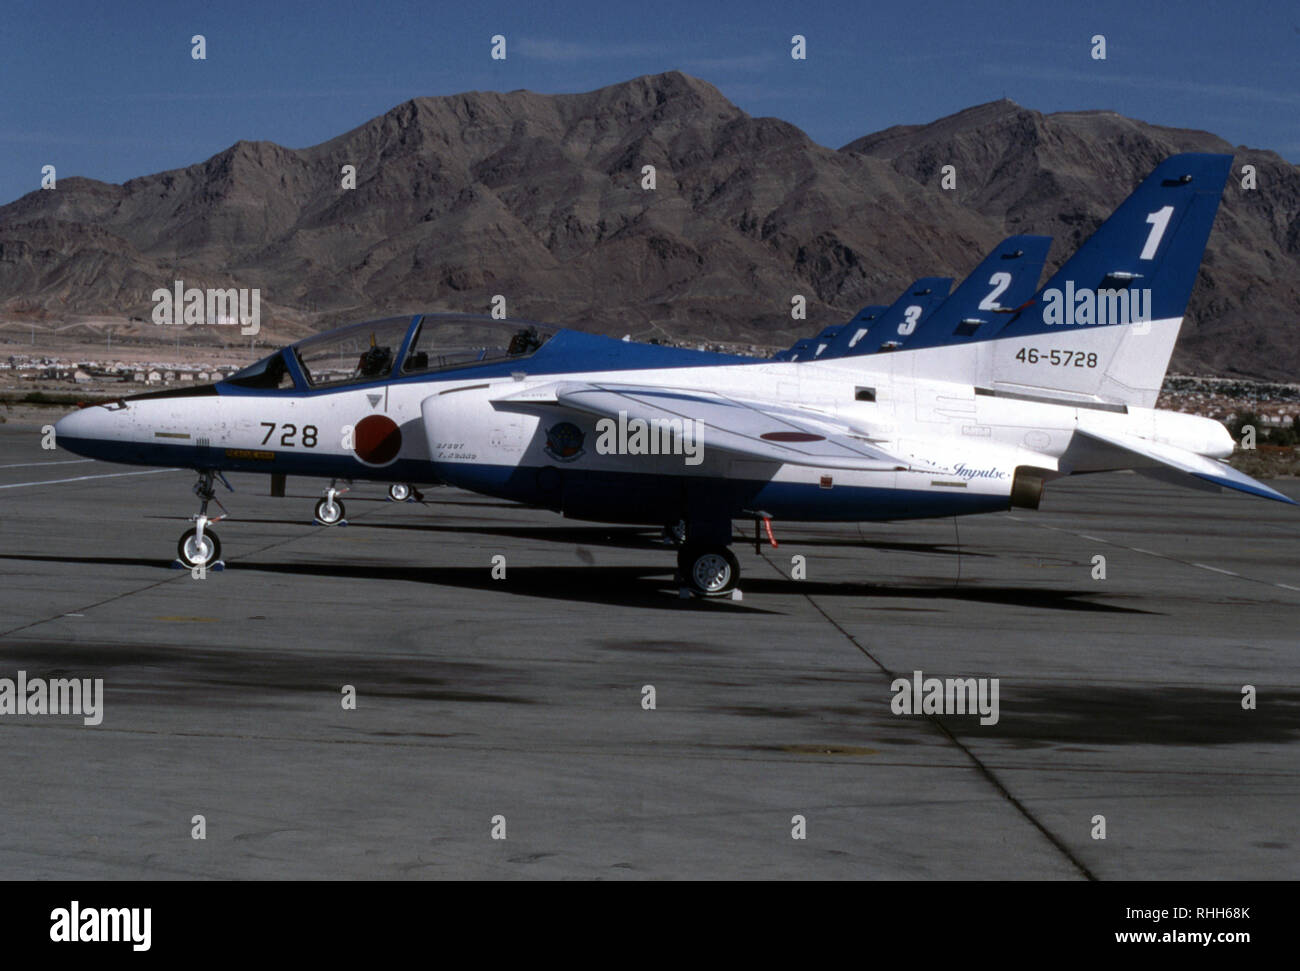 Japan Air Self-Defense Force JASDF - Japanese subsonic intermediate jet trainer aircraft Kawasaki T-4 Stock Photo